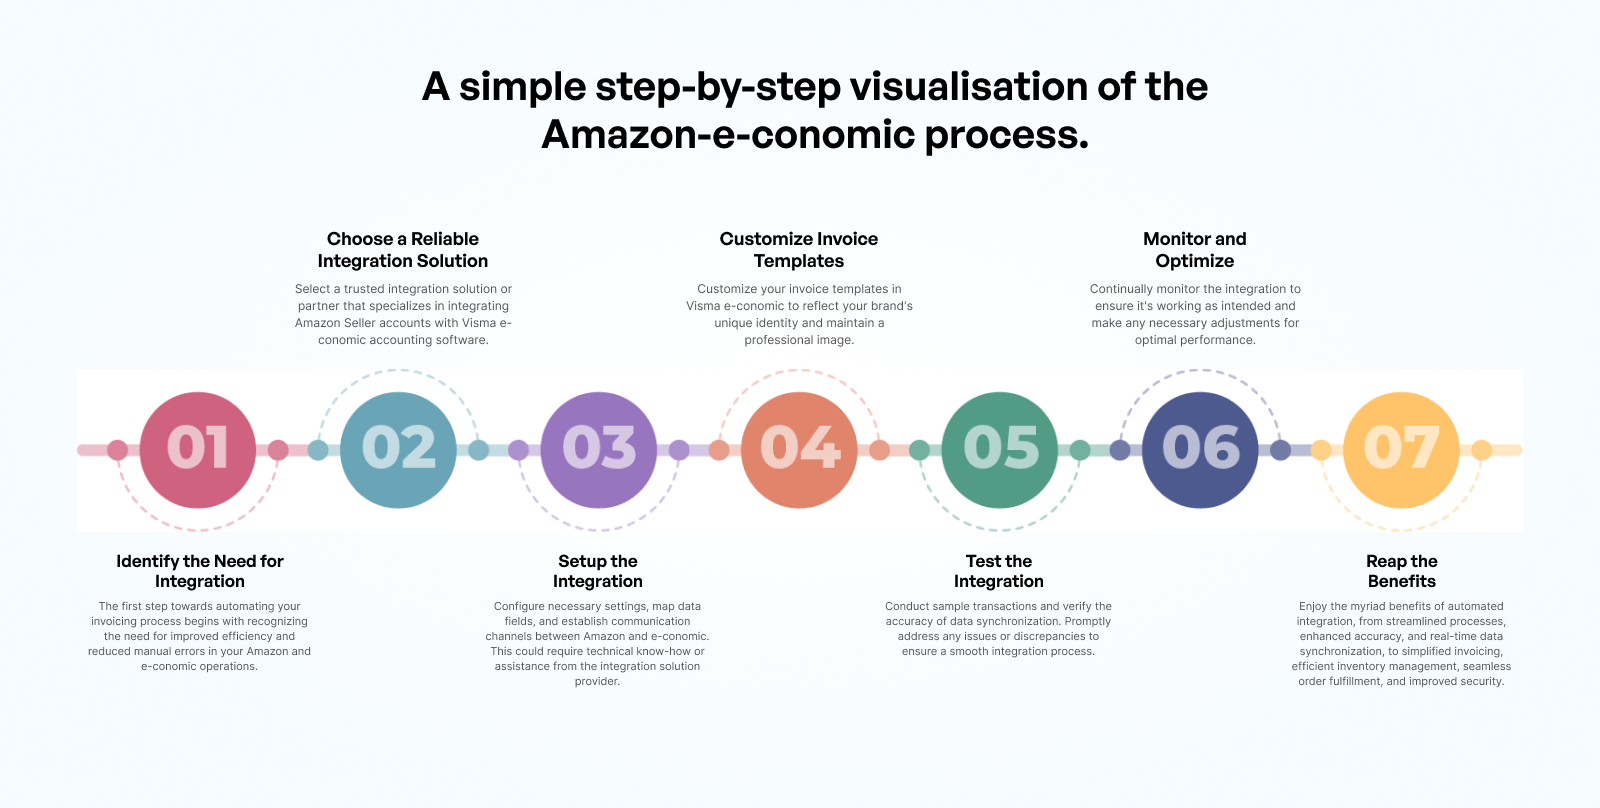 image-steps-amazon-economic.png